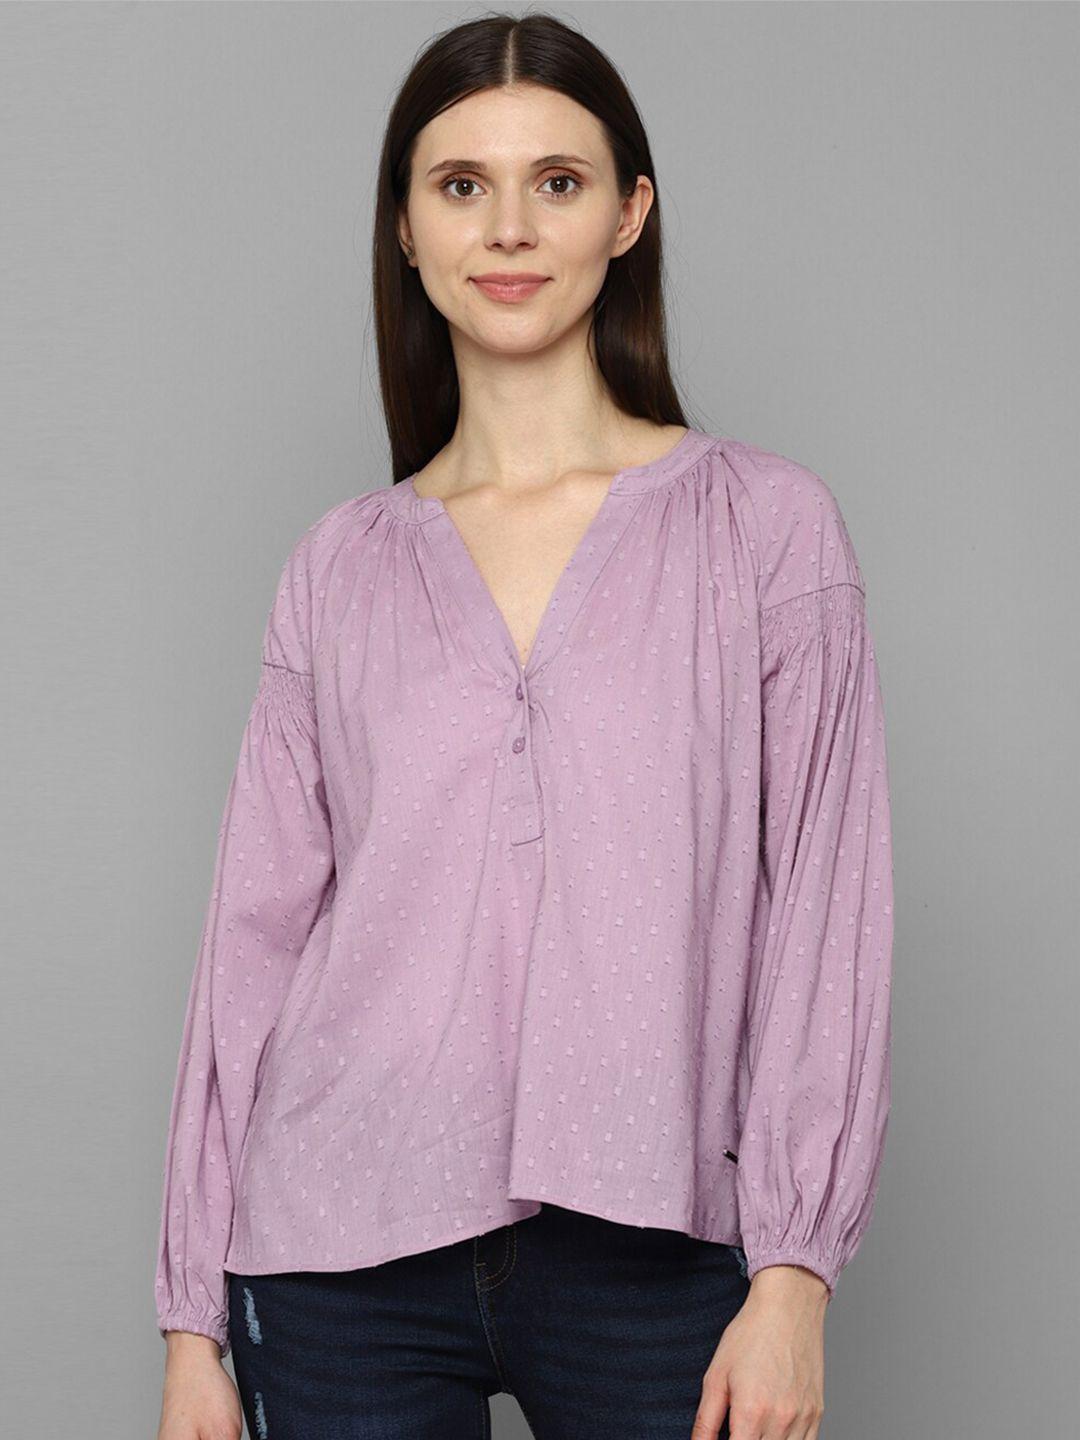 allen solly woman purple self design cuffed sleeves smocked top